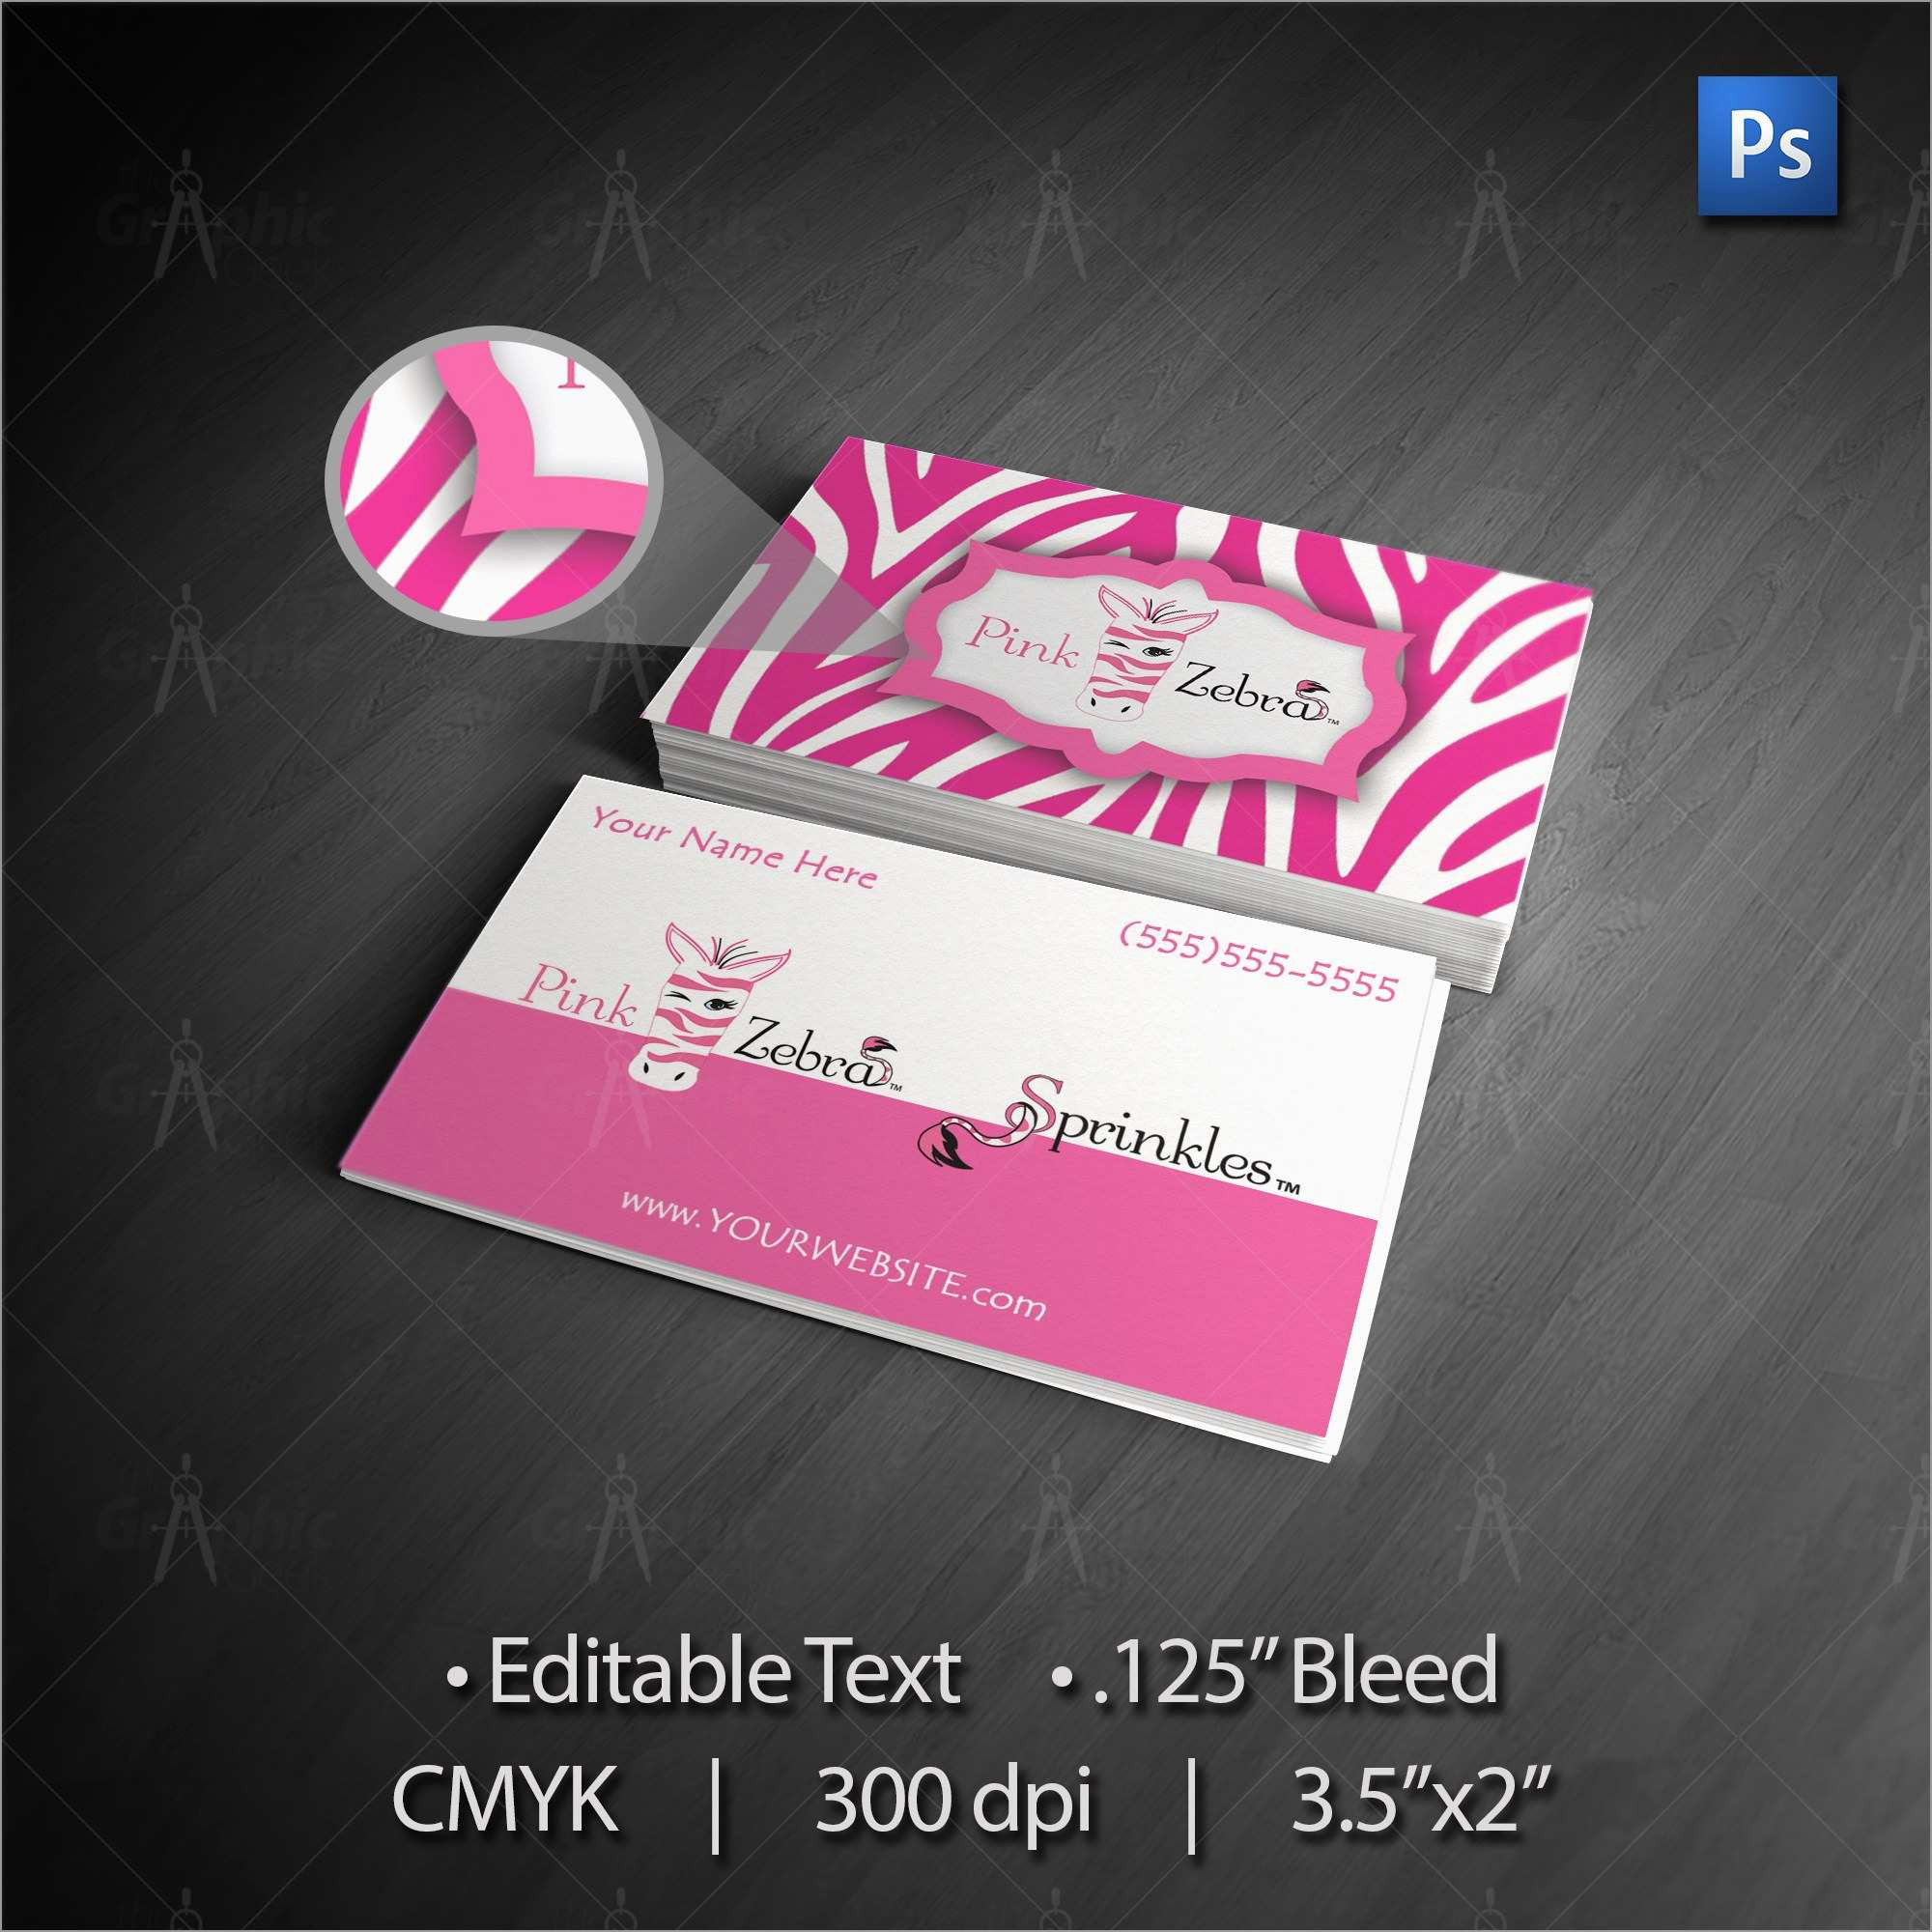 Elegant Free Zebra Business Card Template Of Pink Business Card Template